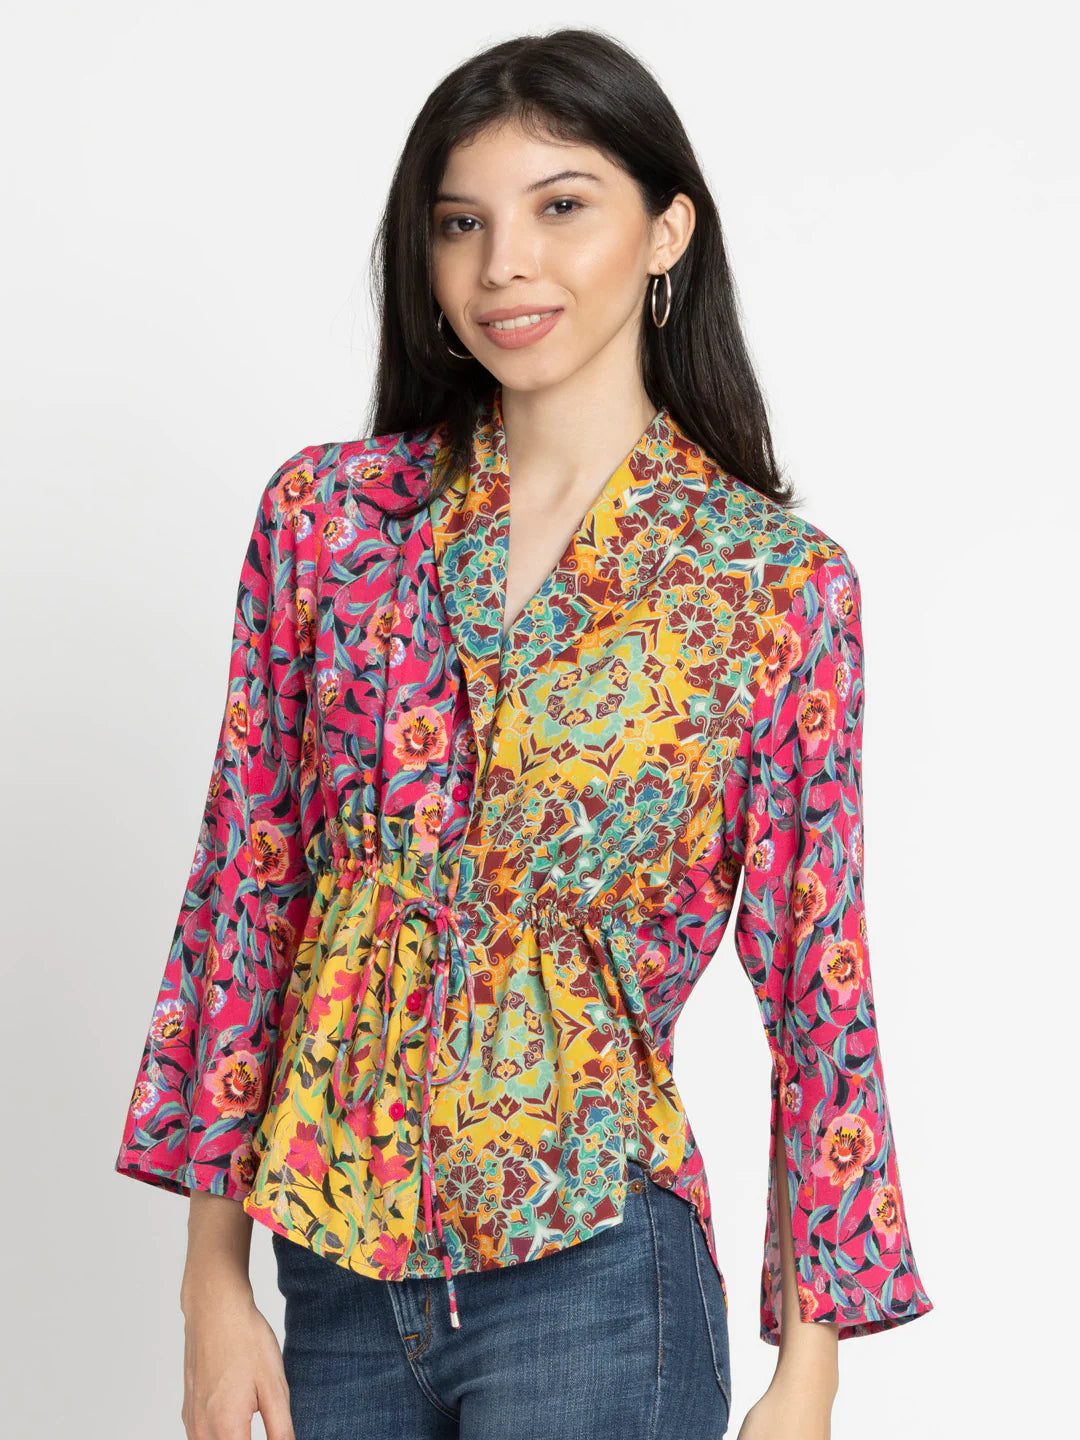 Floral Shirt Jacket for Women | Vibrant Fuchsia Floral Shirt Jacket